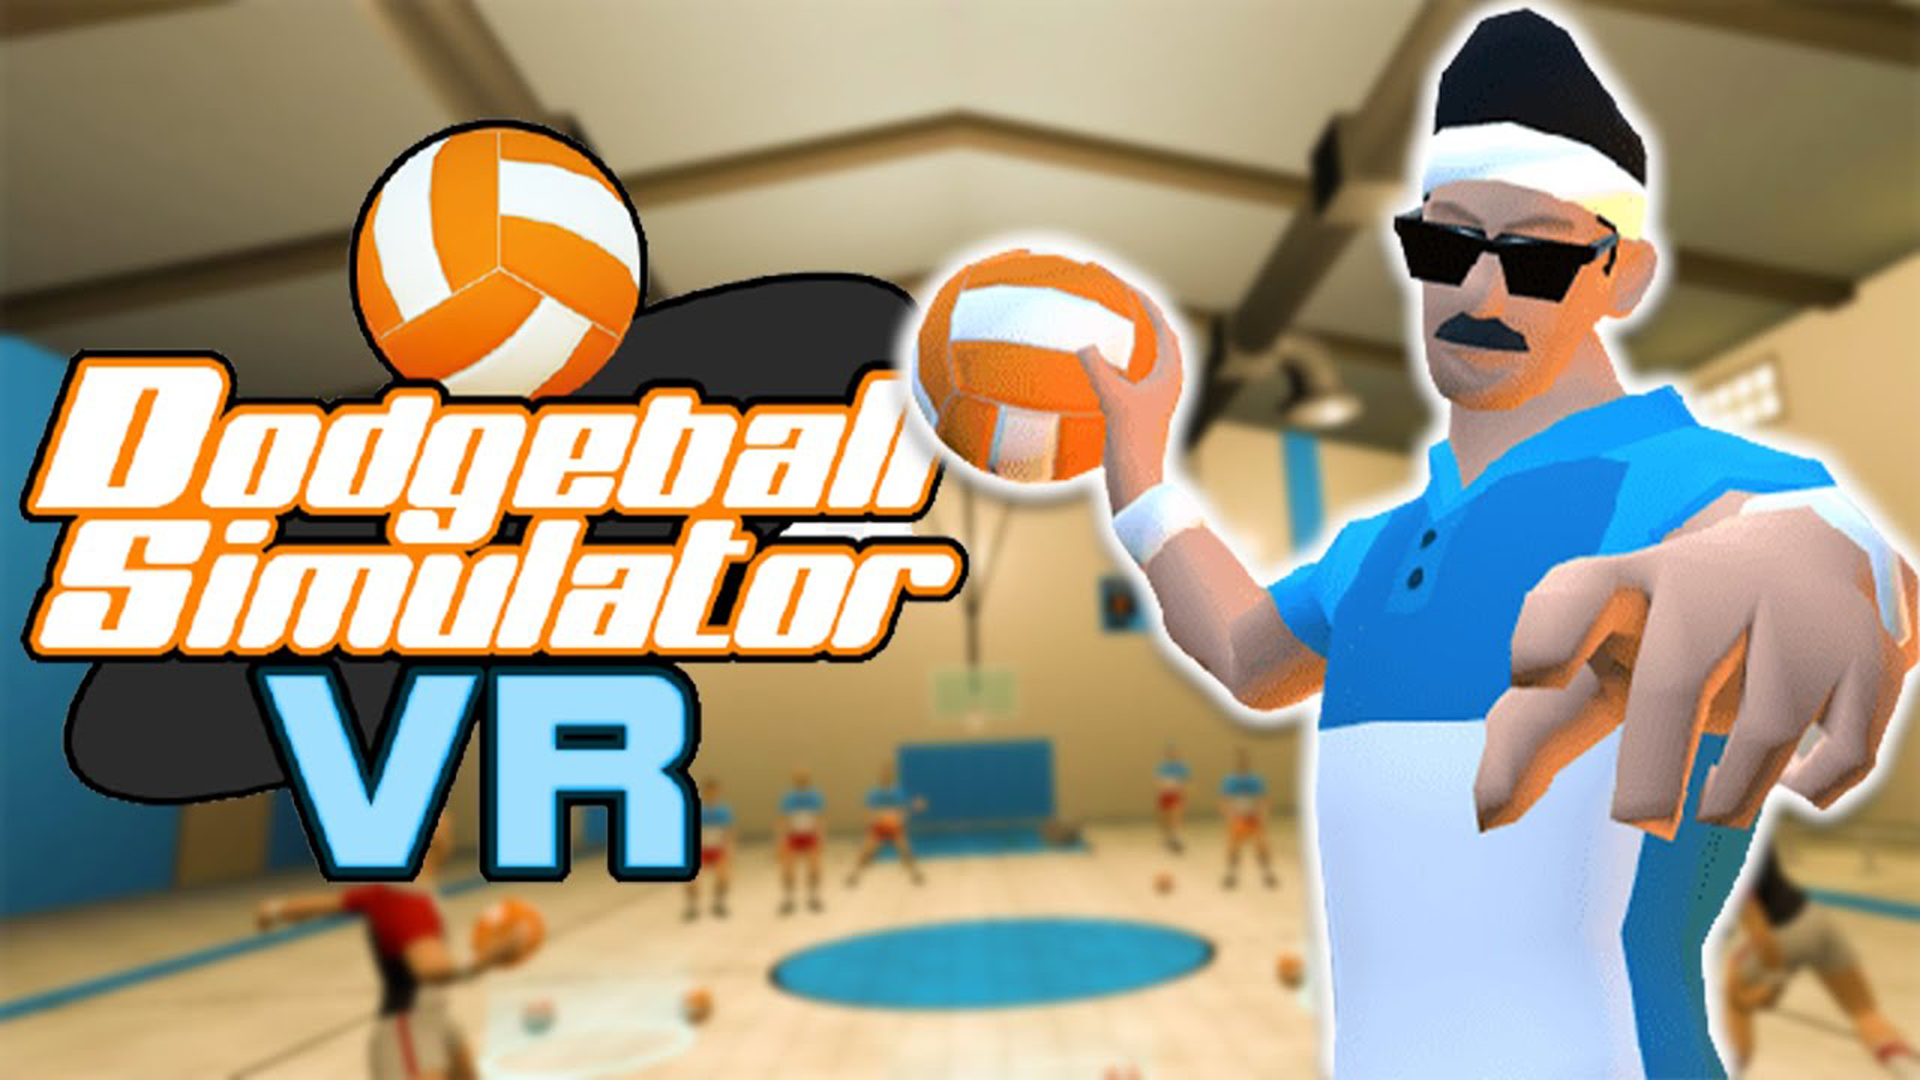 Let’s Play Dodgeball Simulator VR (Steam VR)